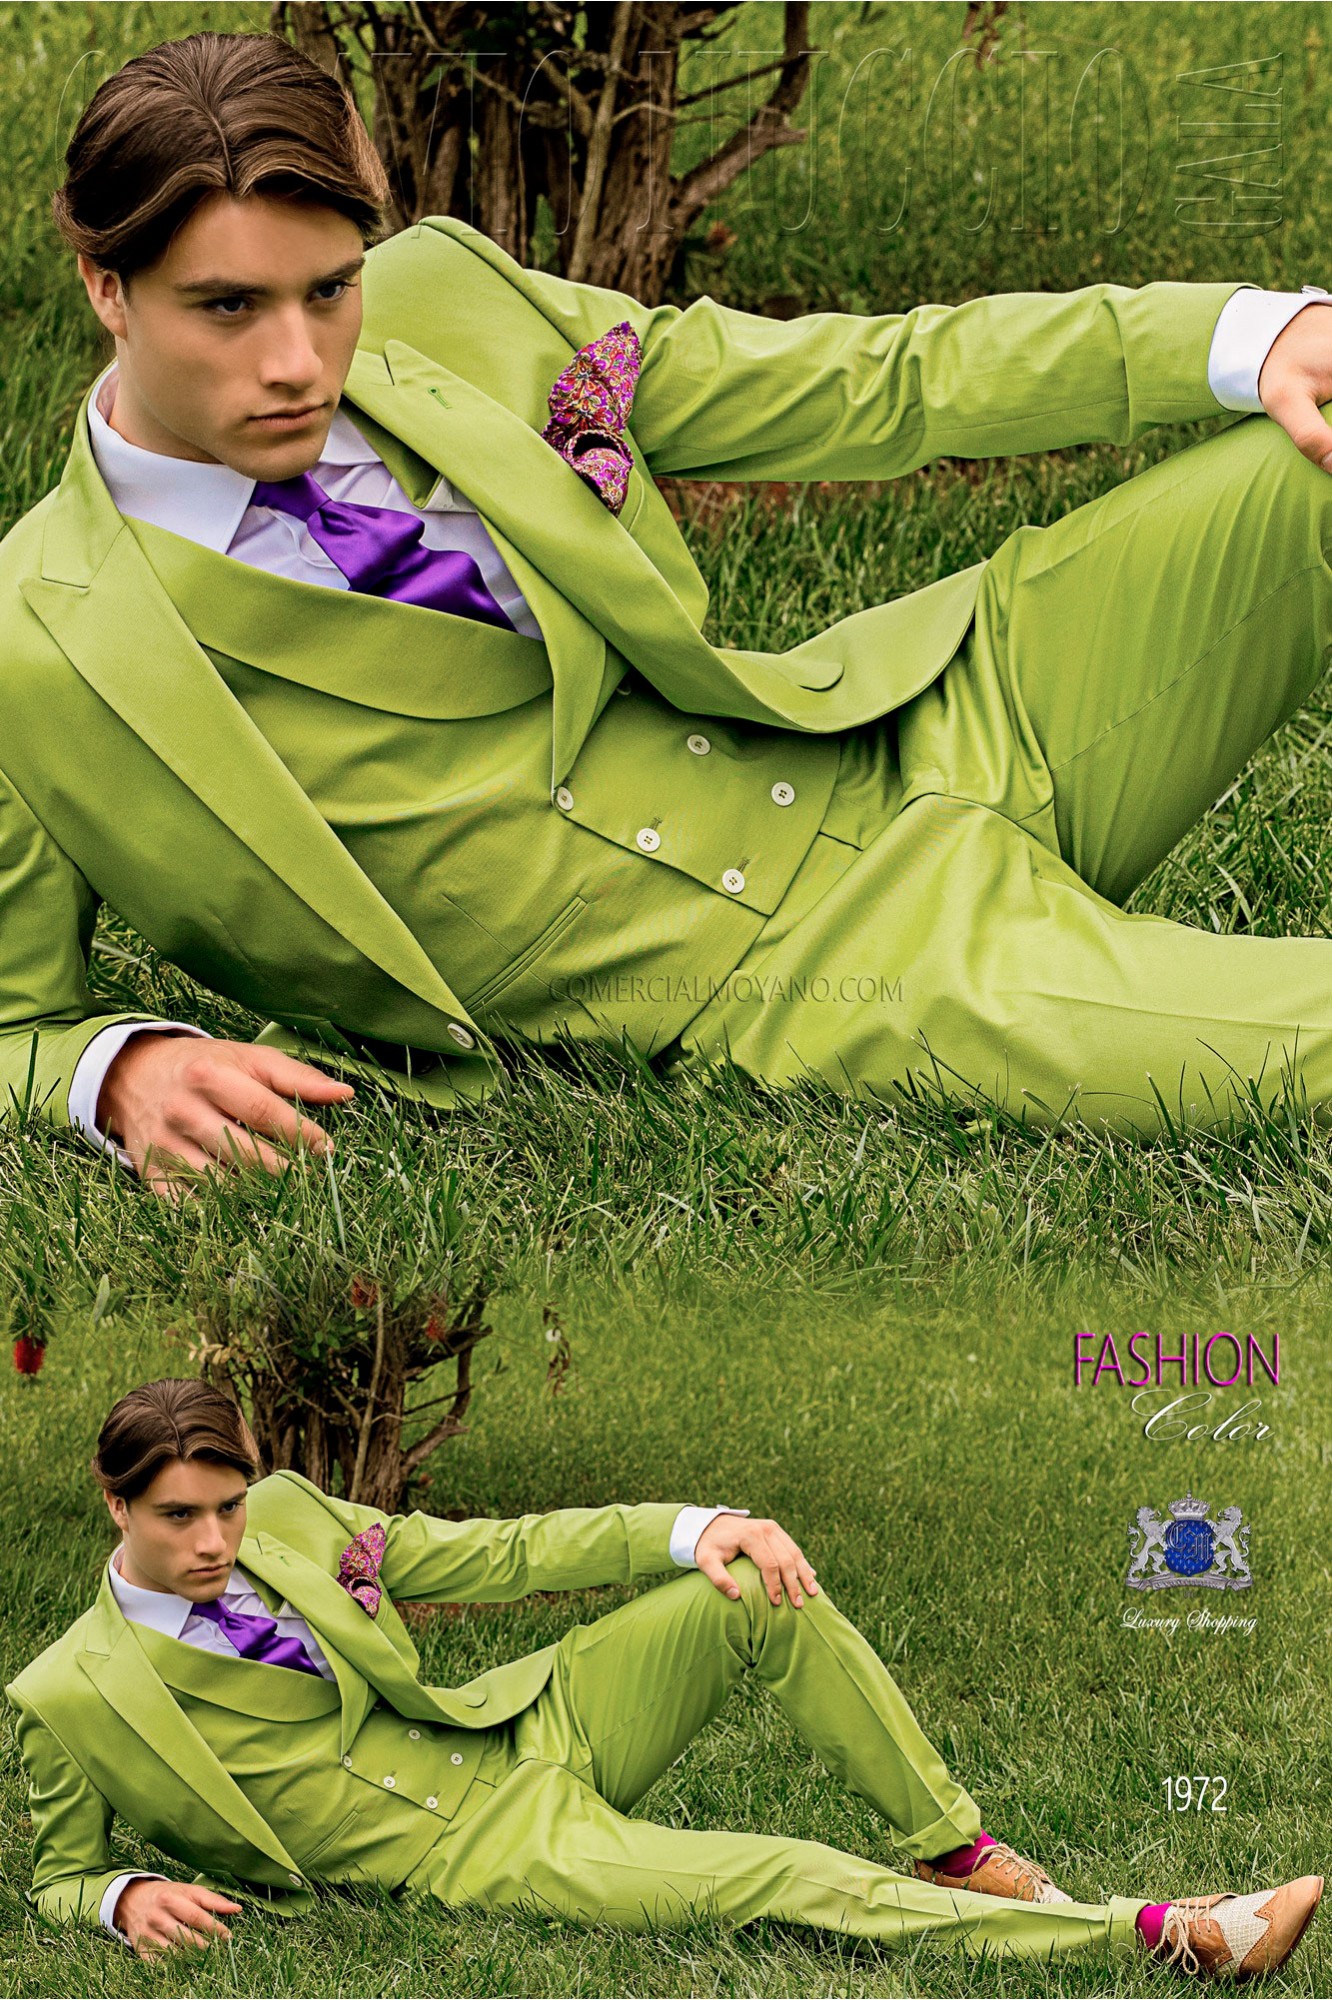 Bespoke pure cotton green fashion suit model 1972 Mario Moyano